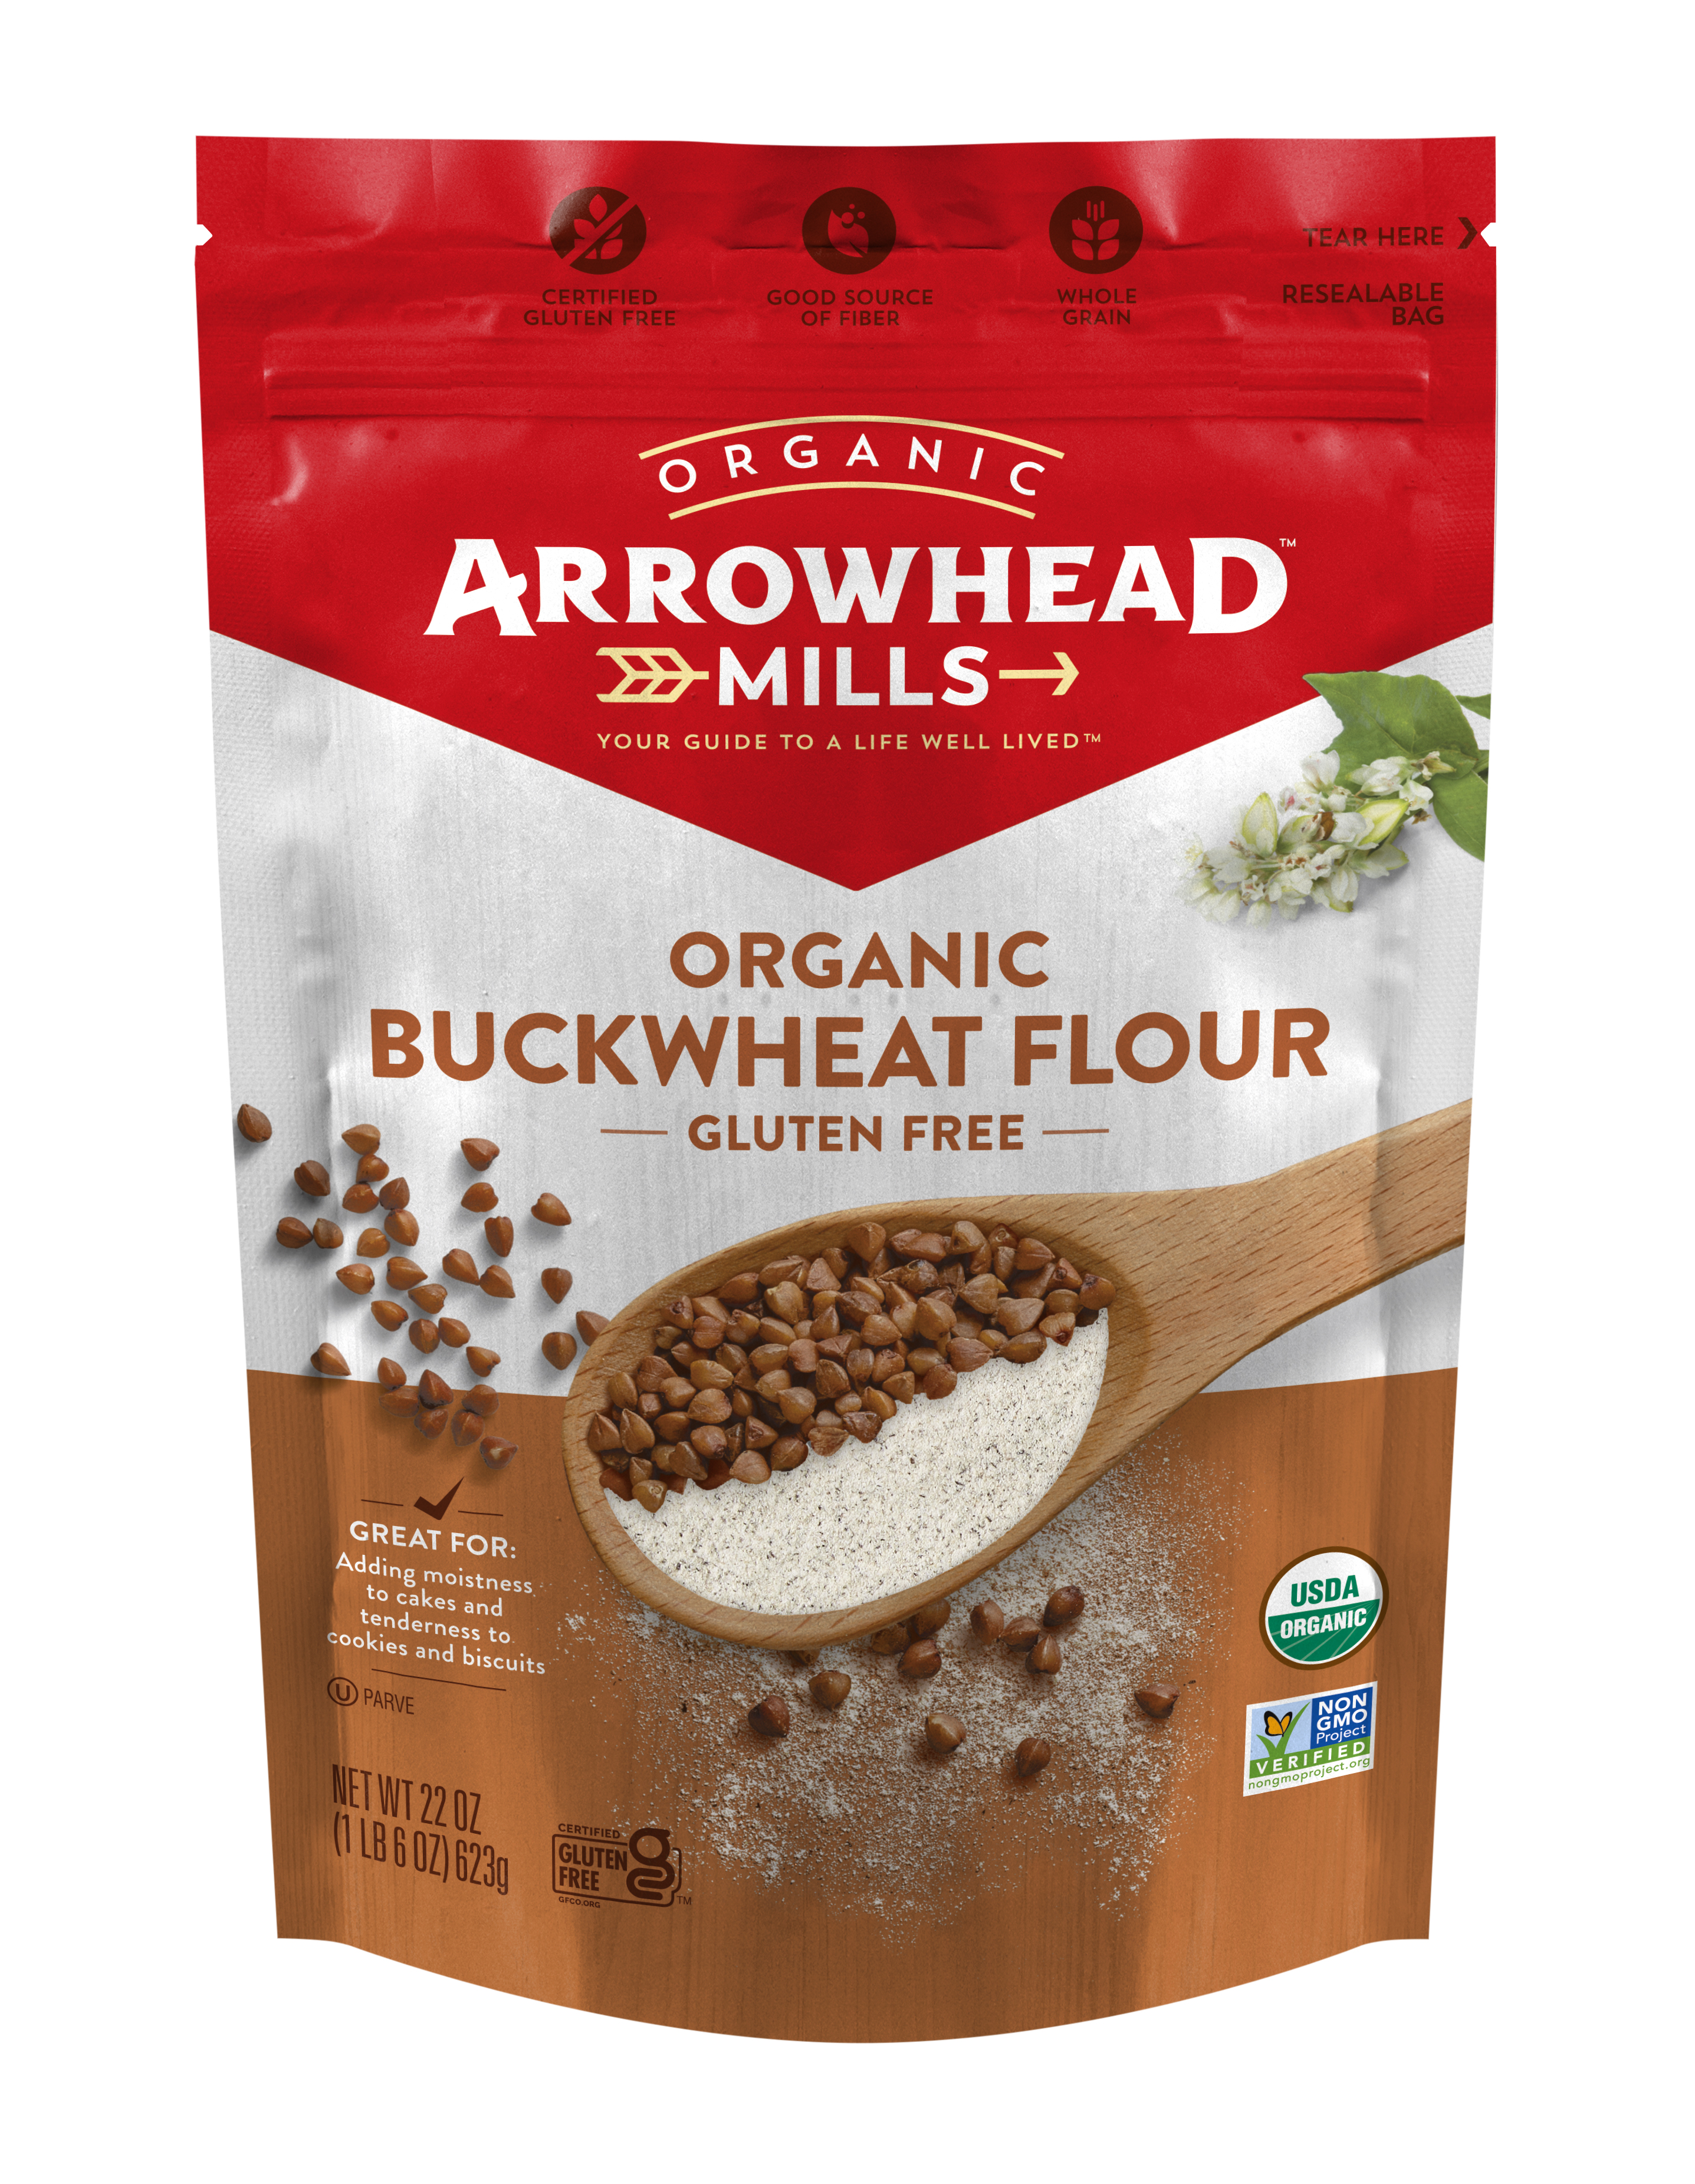 Arrowhead Mills Buckwheat Flour 6 units per case 22.0 oz